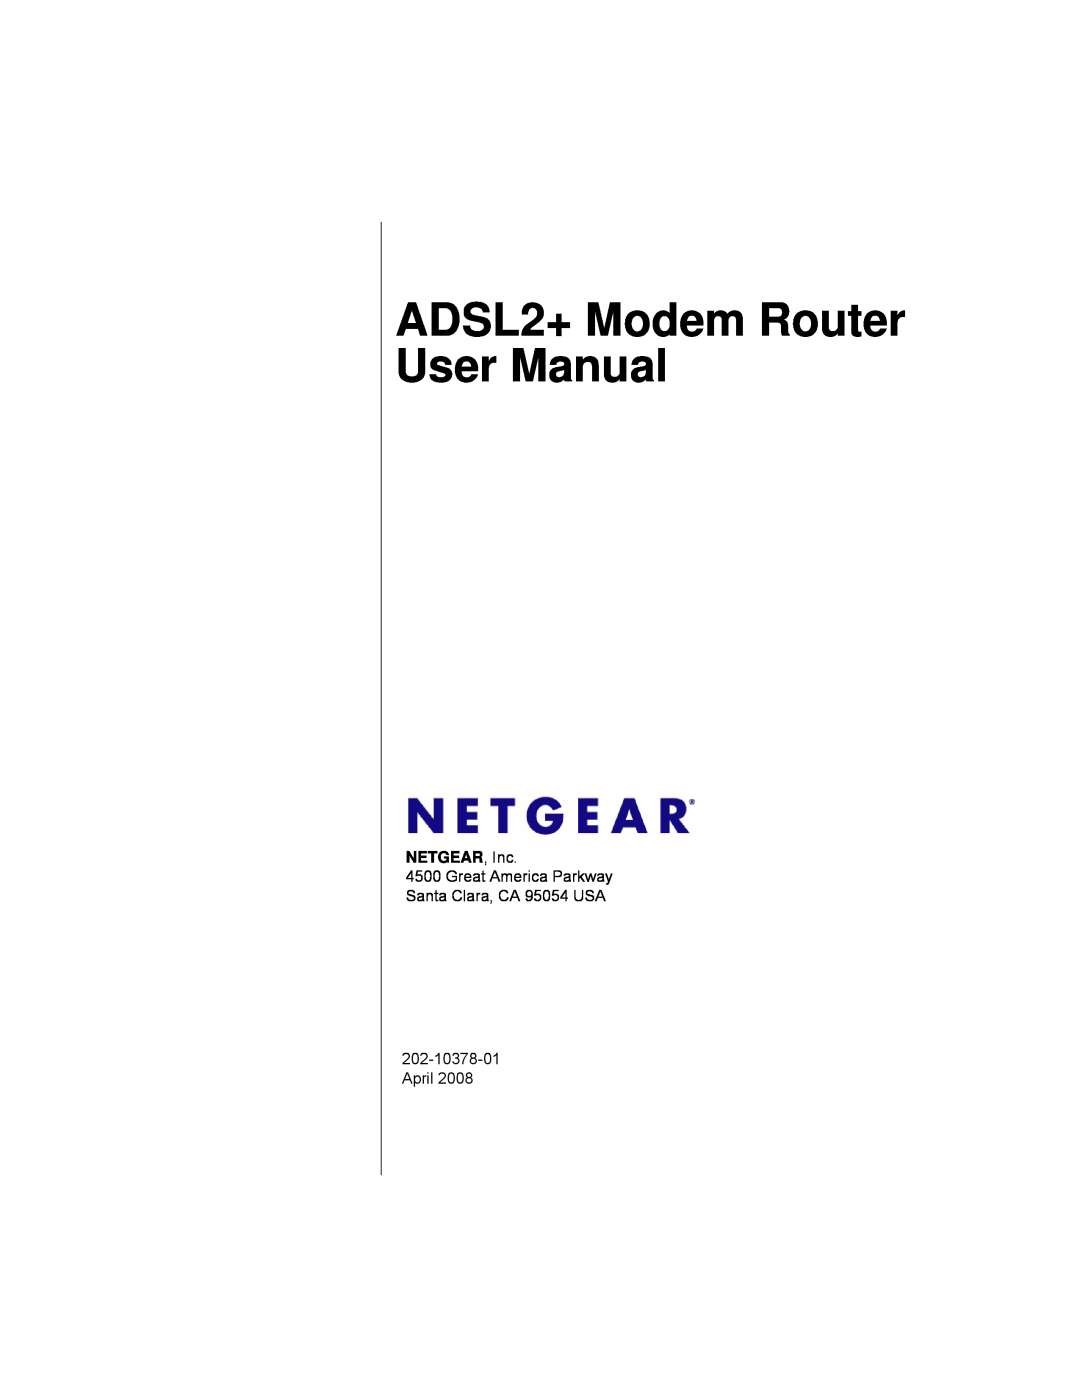 NETGEAR user manual ADSL2+ Modem Router User Manual, NETGEAR, Inc 